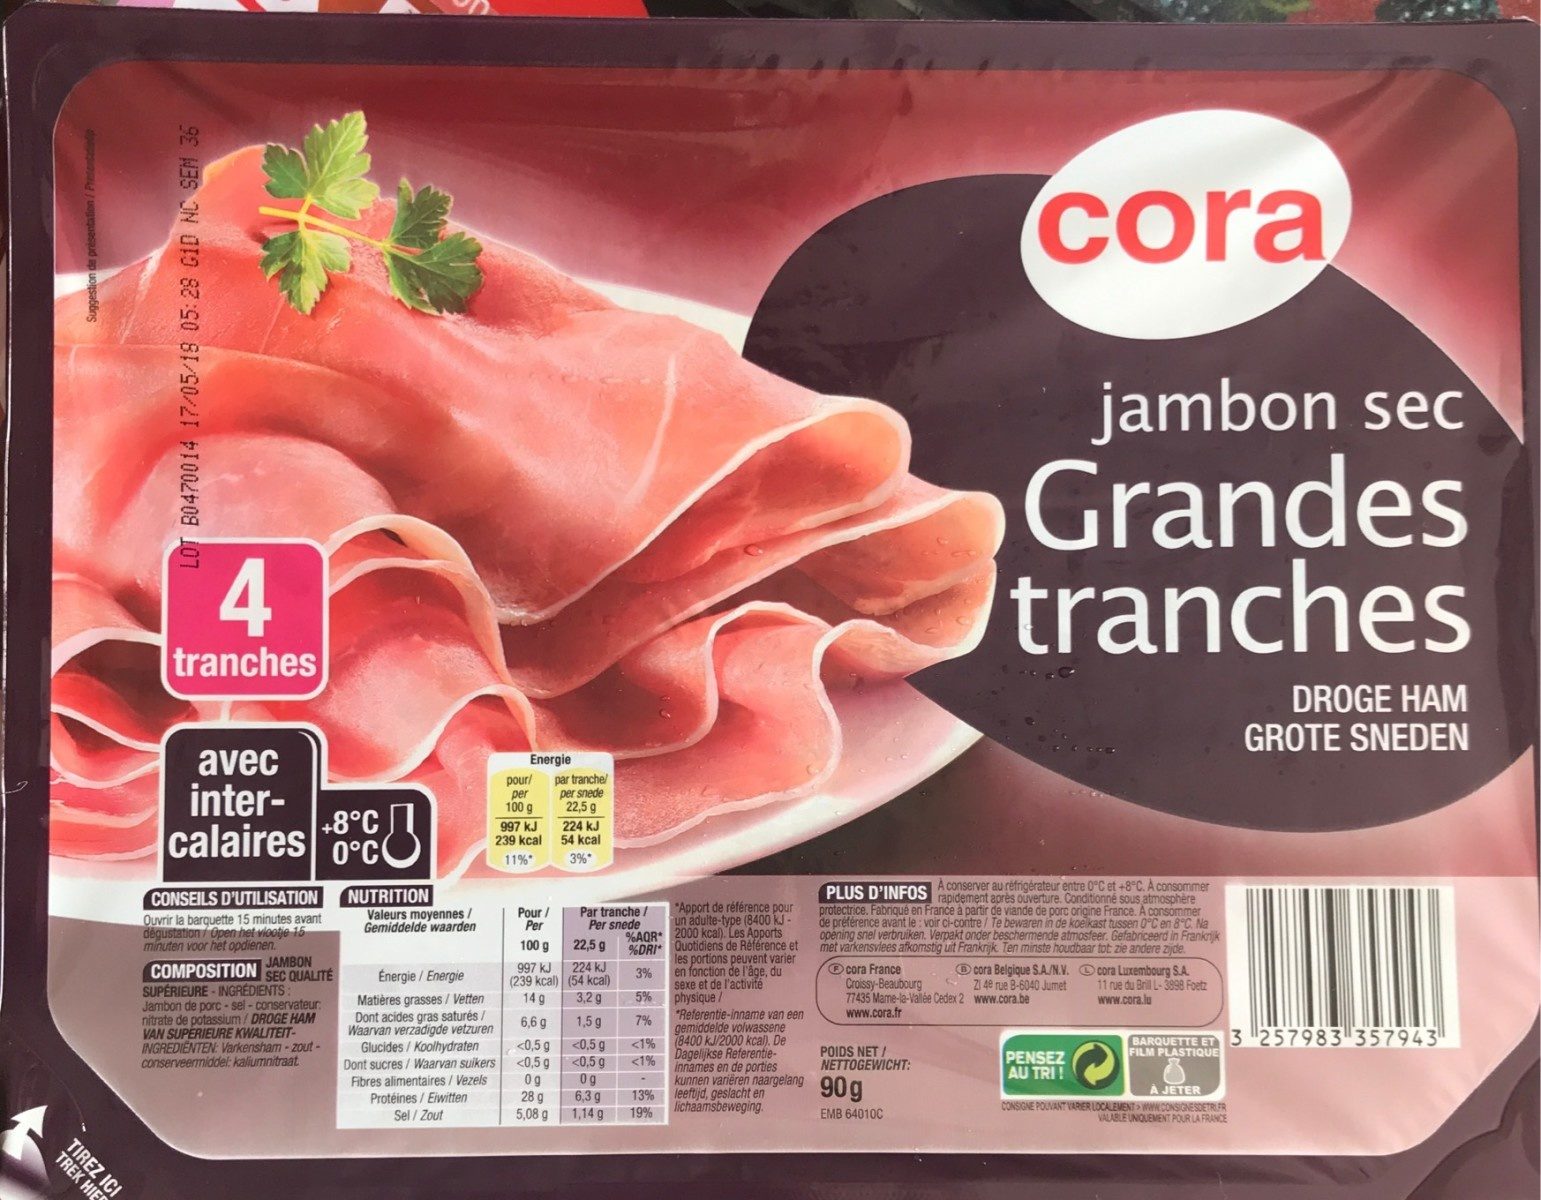 Jambon sec Grandes tranches - Product - fr